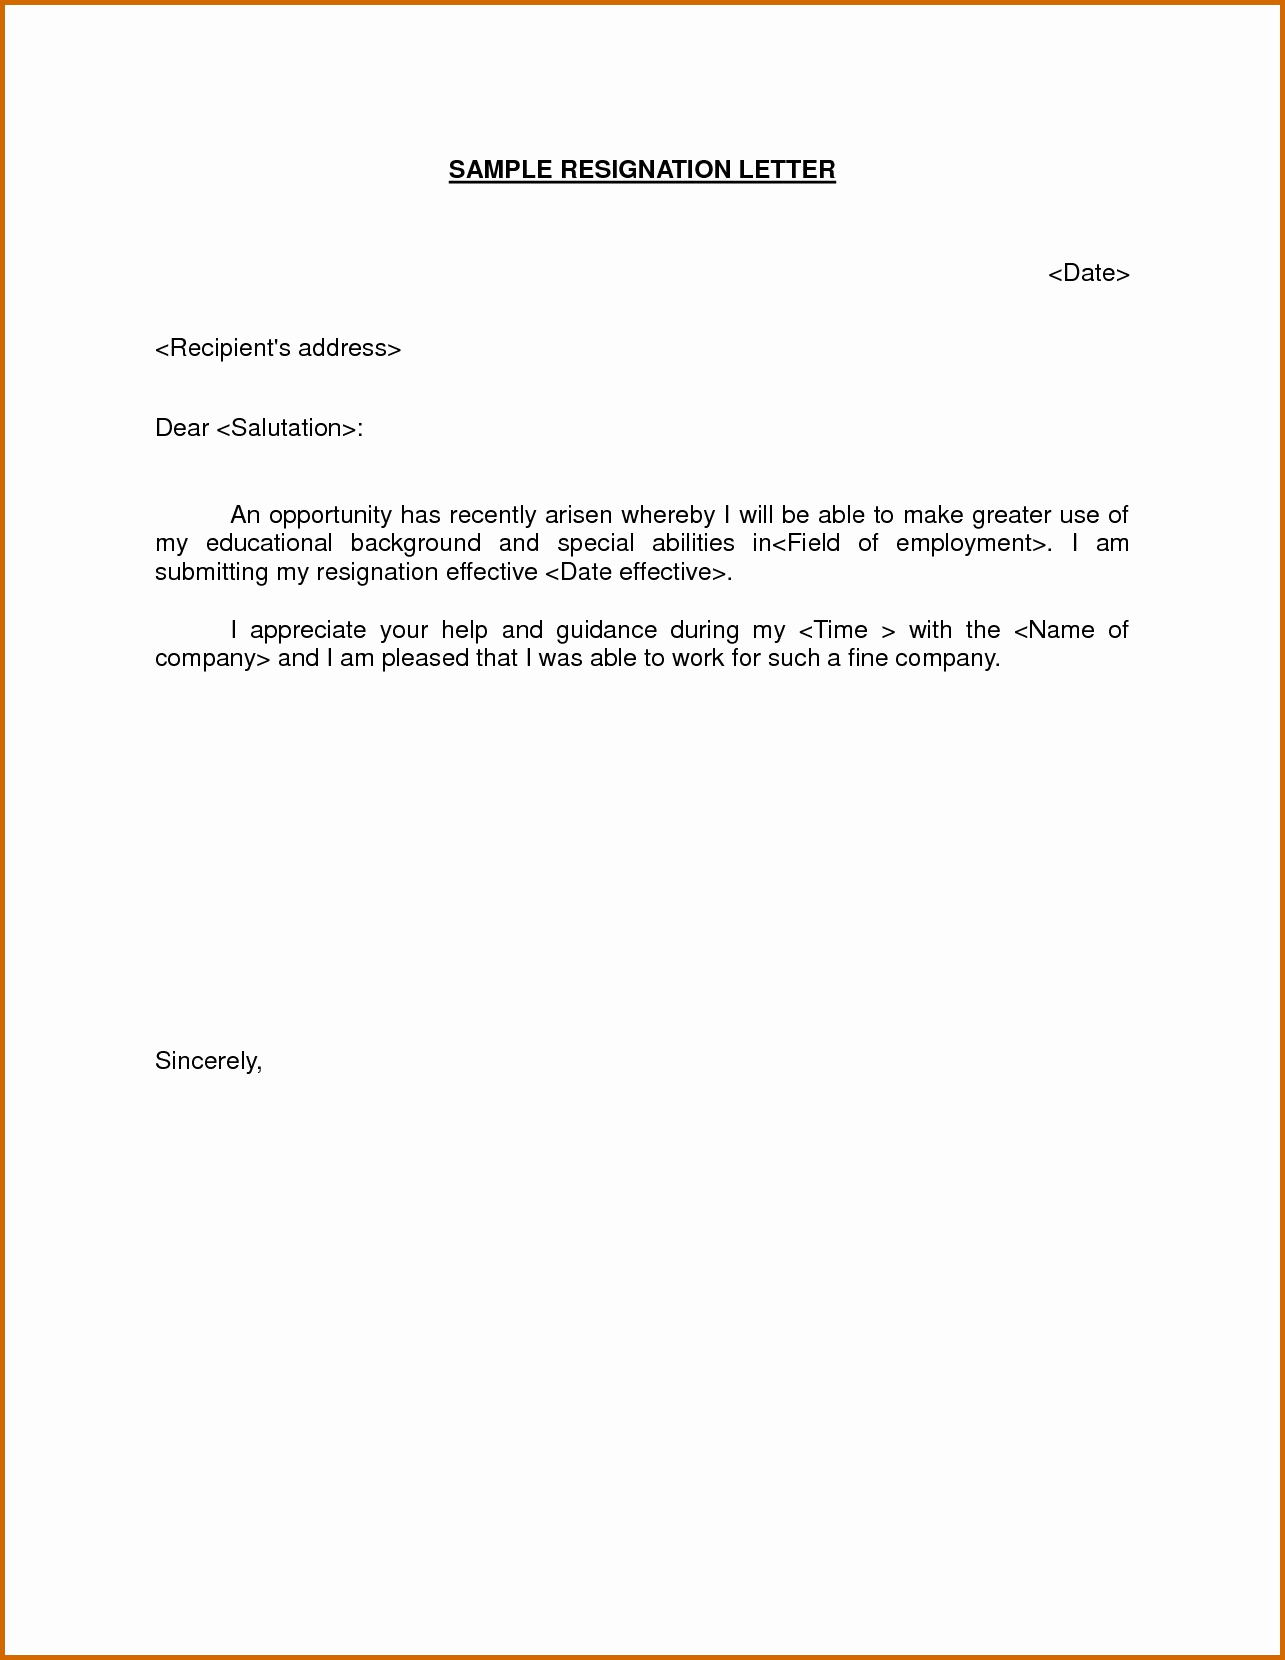 Template for Resignation Letter Inspirational Basic Resignation Letter Samples Simple Sample Doc